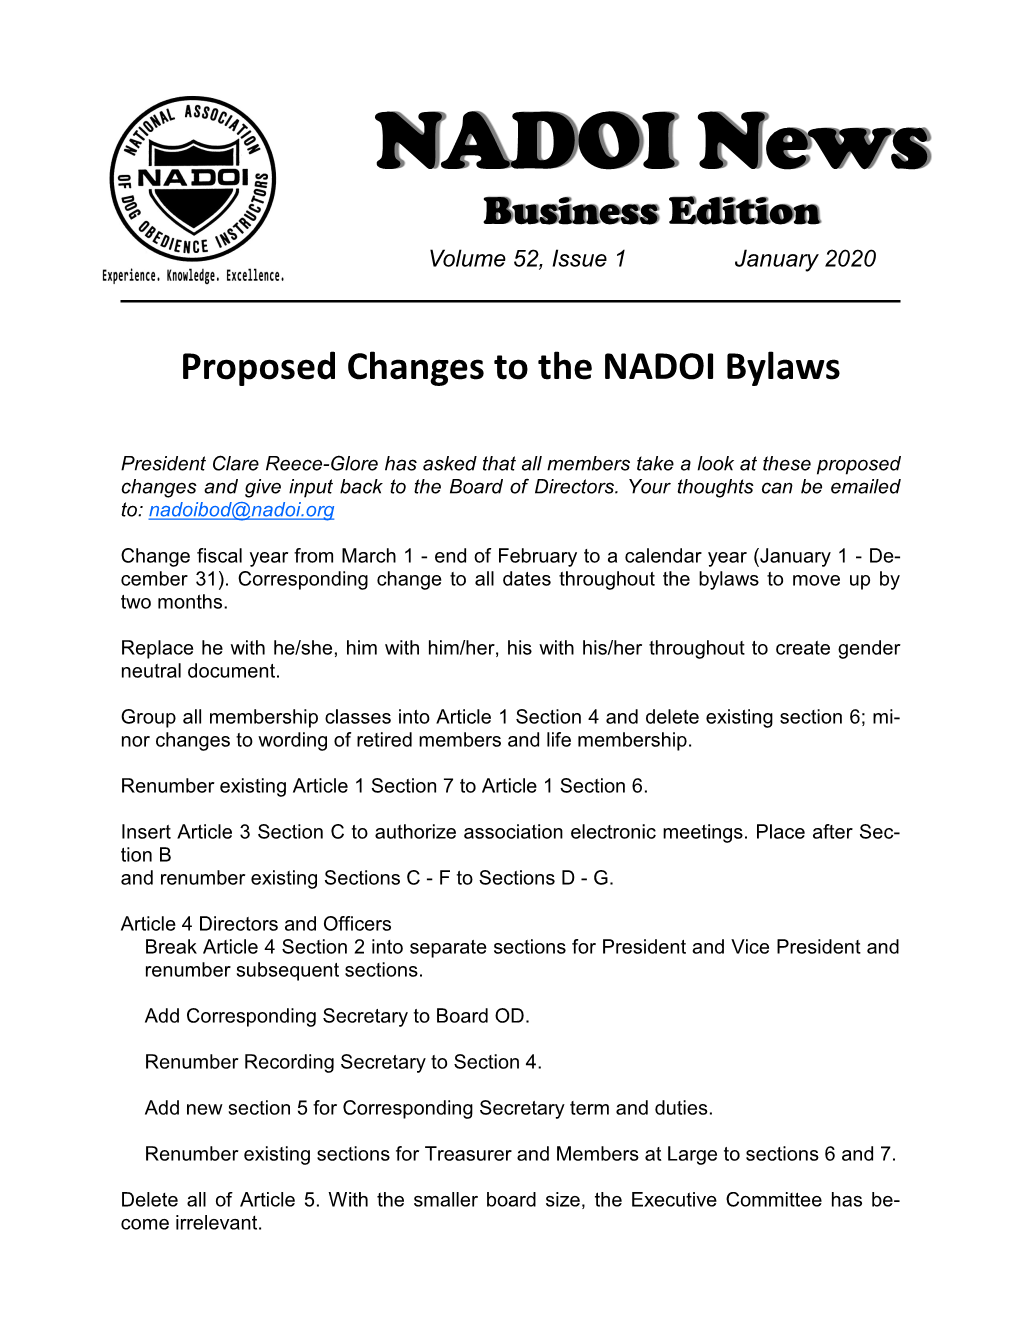 NADOI News Business Edition